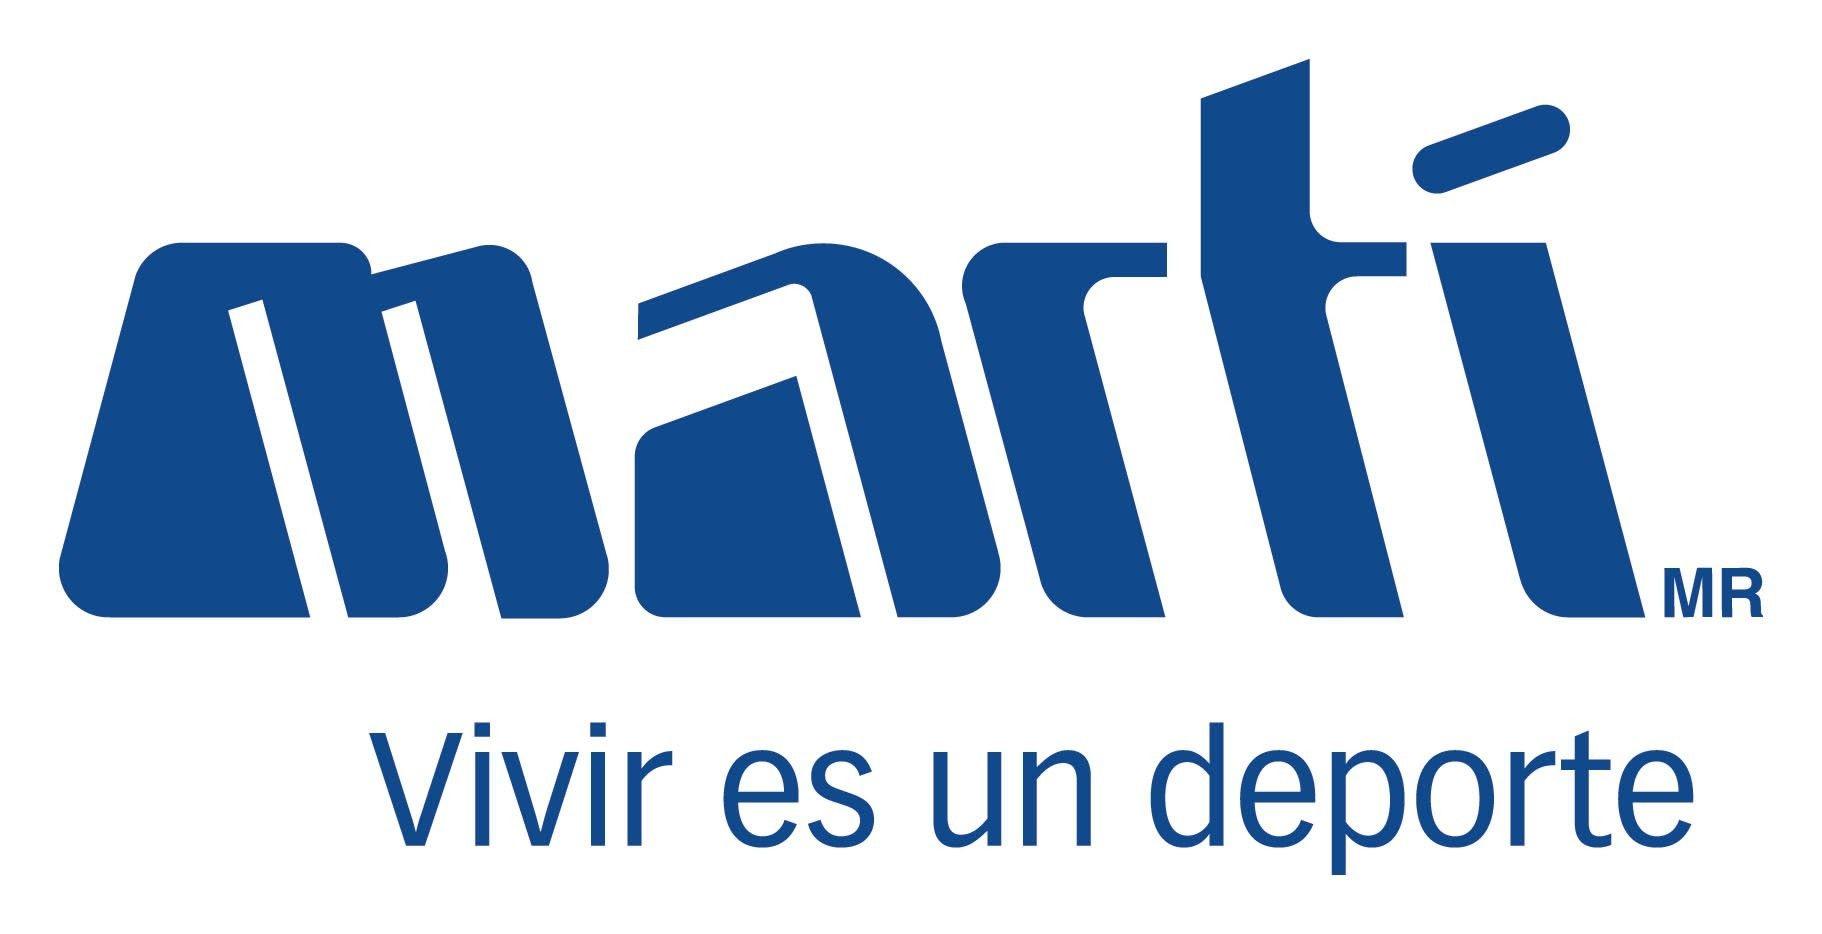 Marti Logo - Marti Logo Photo - 1 | About of logos